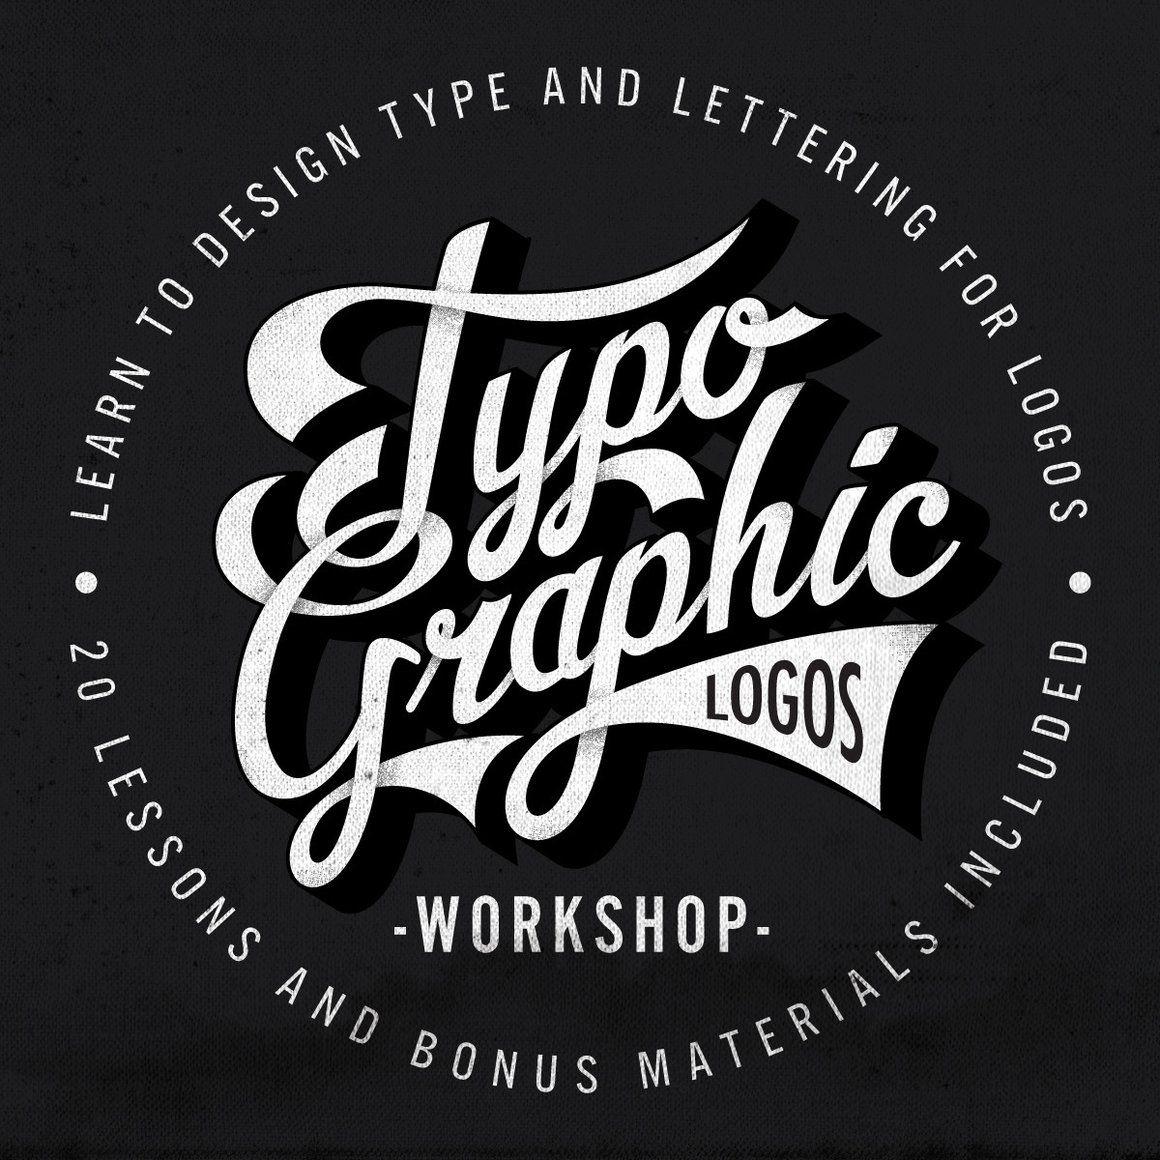 Workshop Logo - Typographic Logos Workshop - TheVectorLab